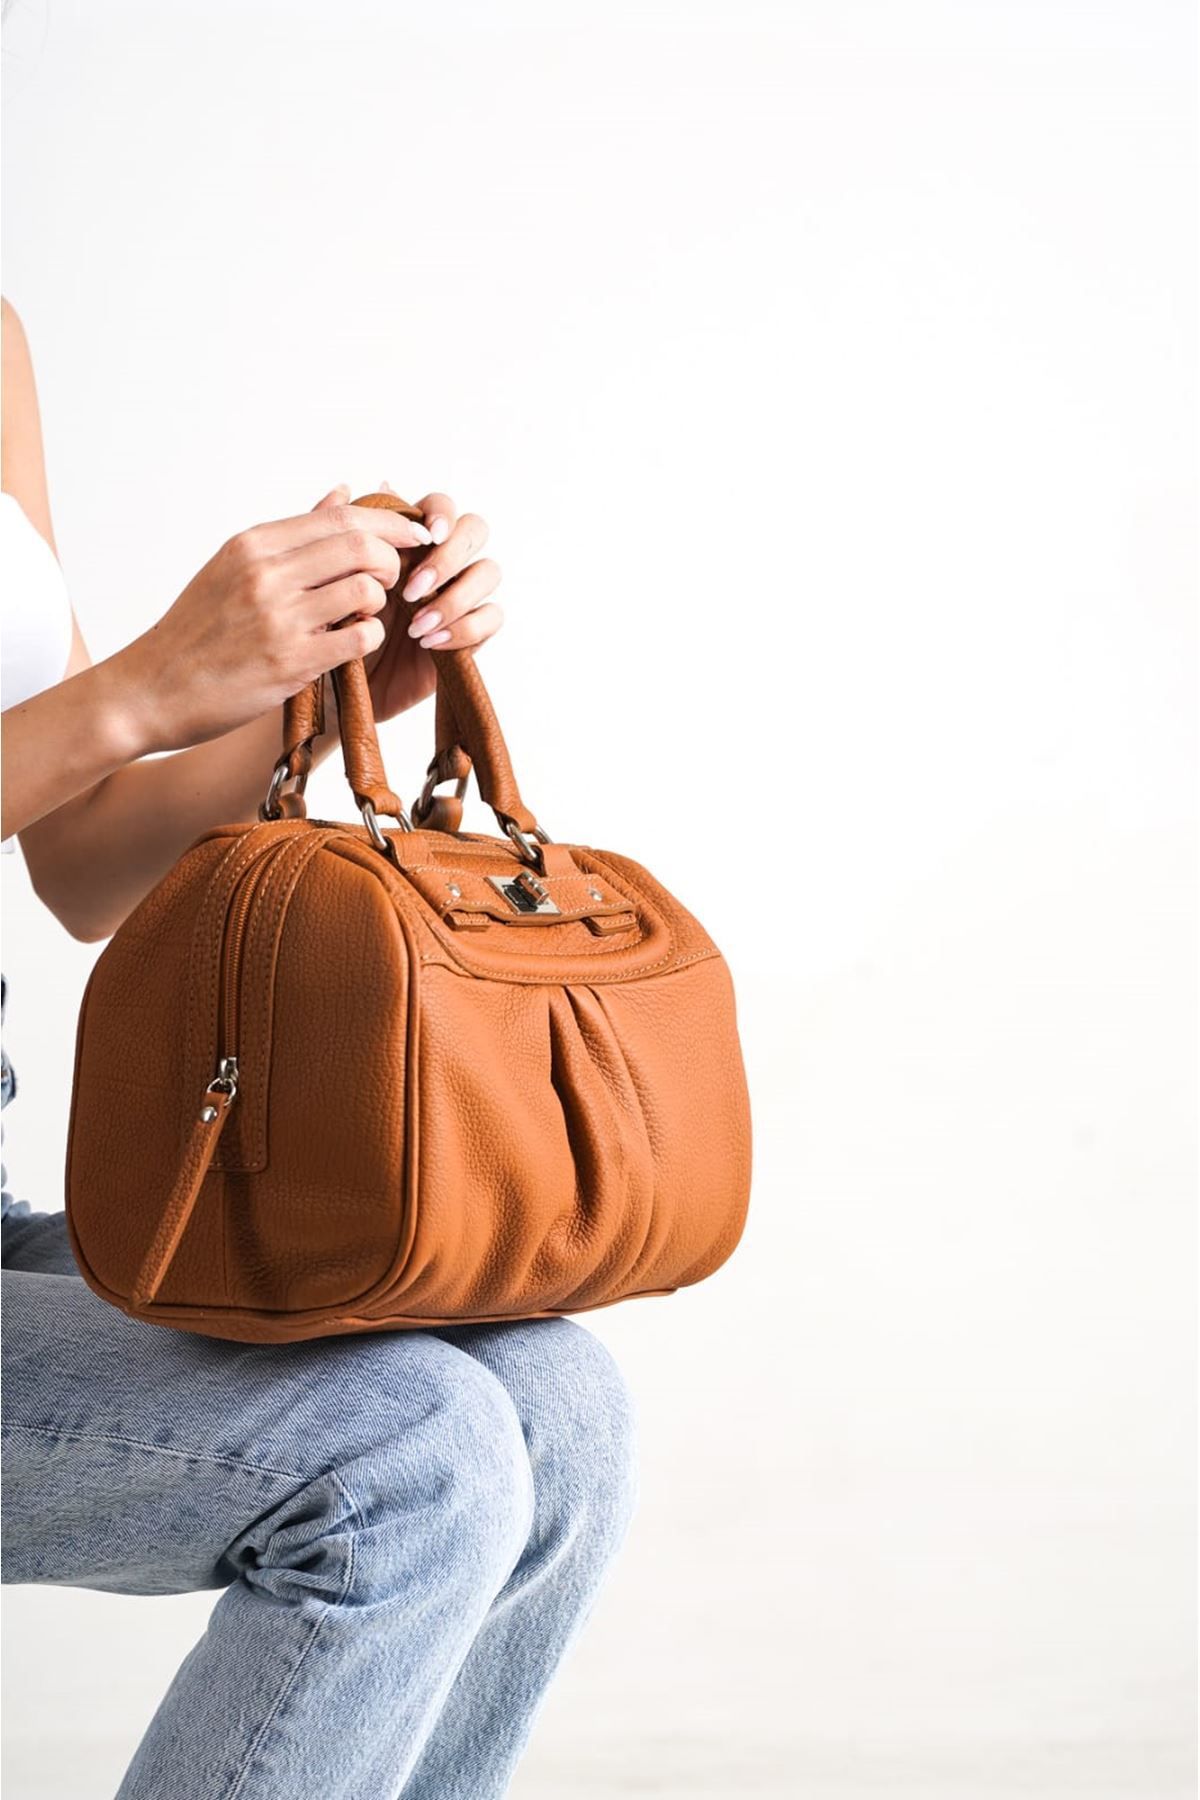 LAL SHOES & BAGS Kadın Hakiki Deri El Çanatsı Bavul Model-Taba